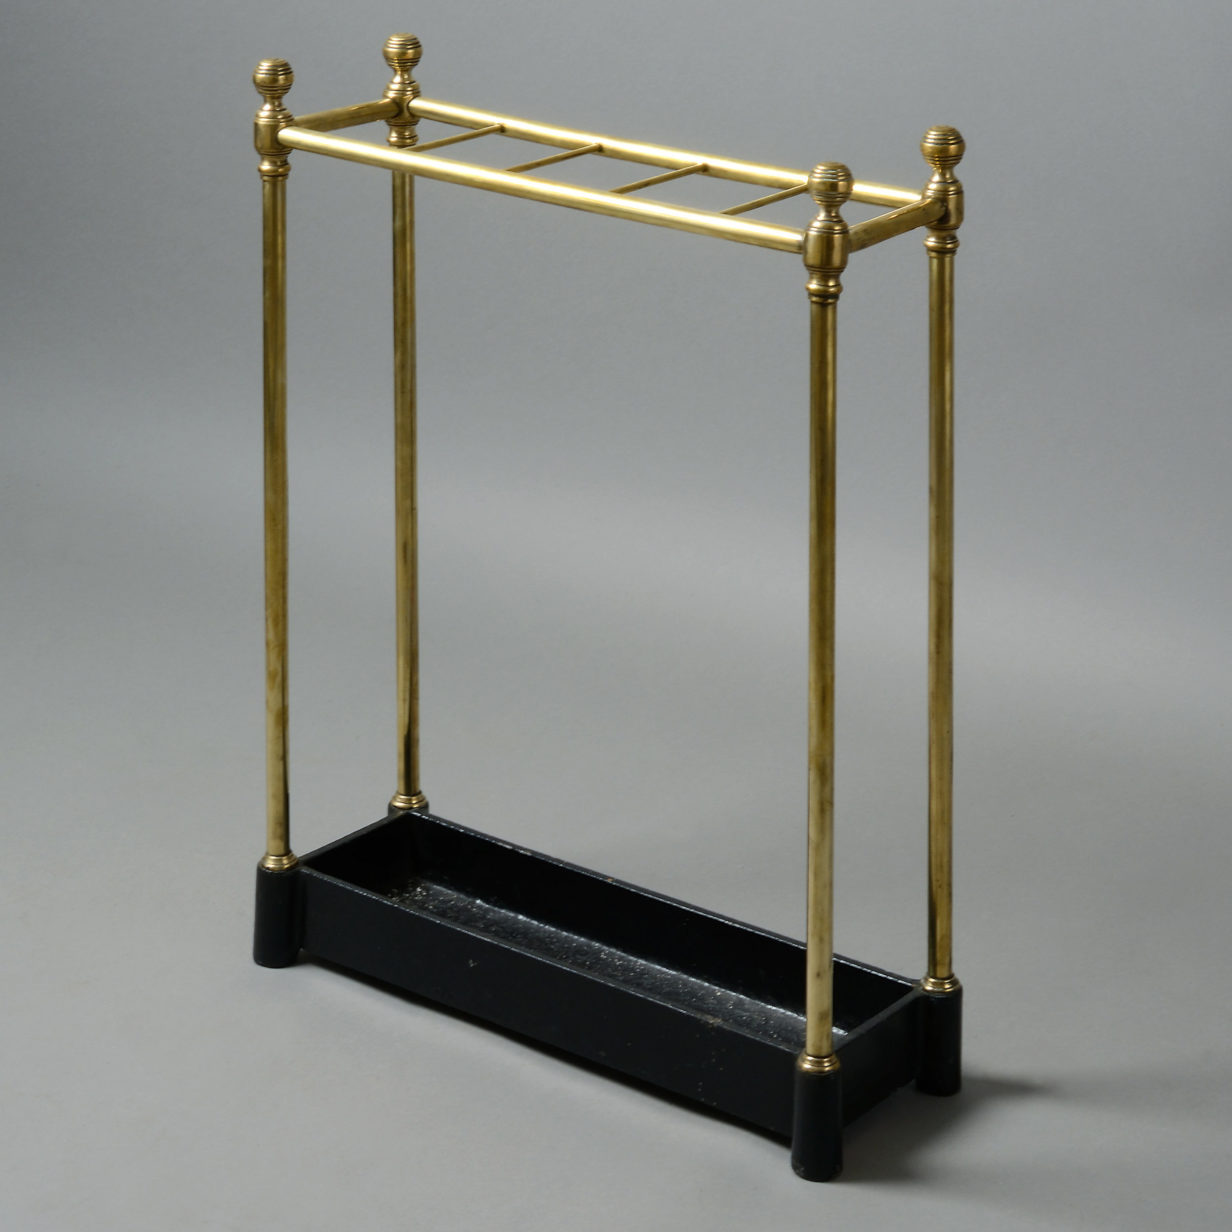 A 19th century brass stick stand